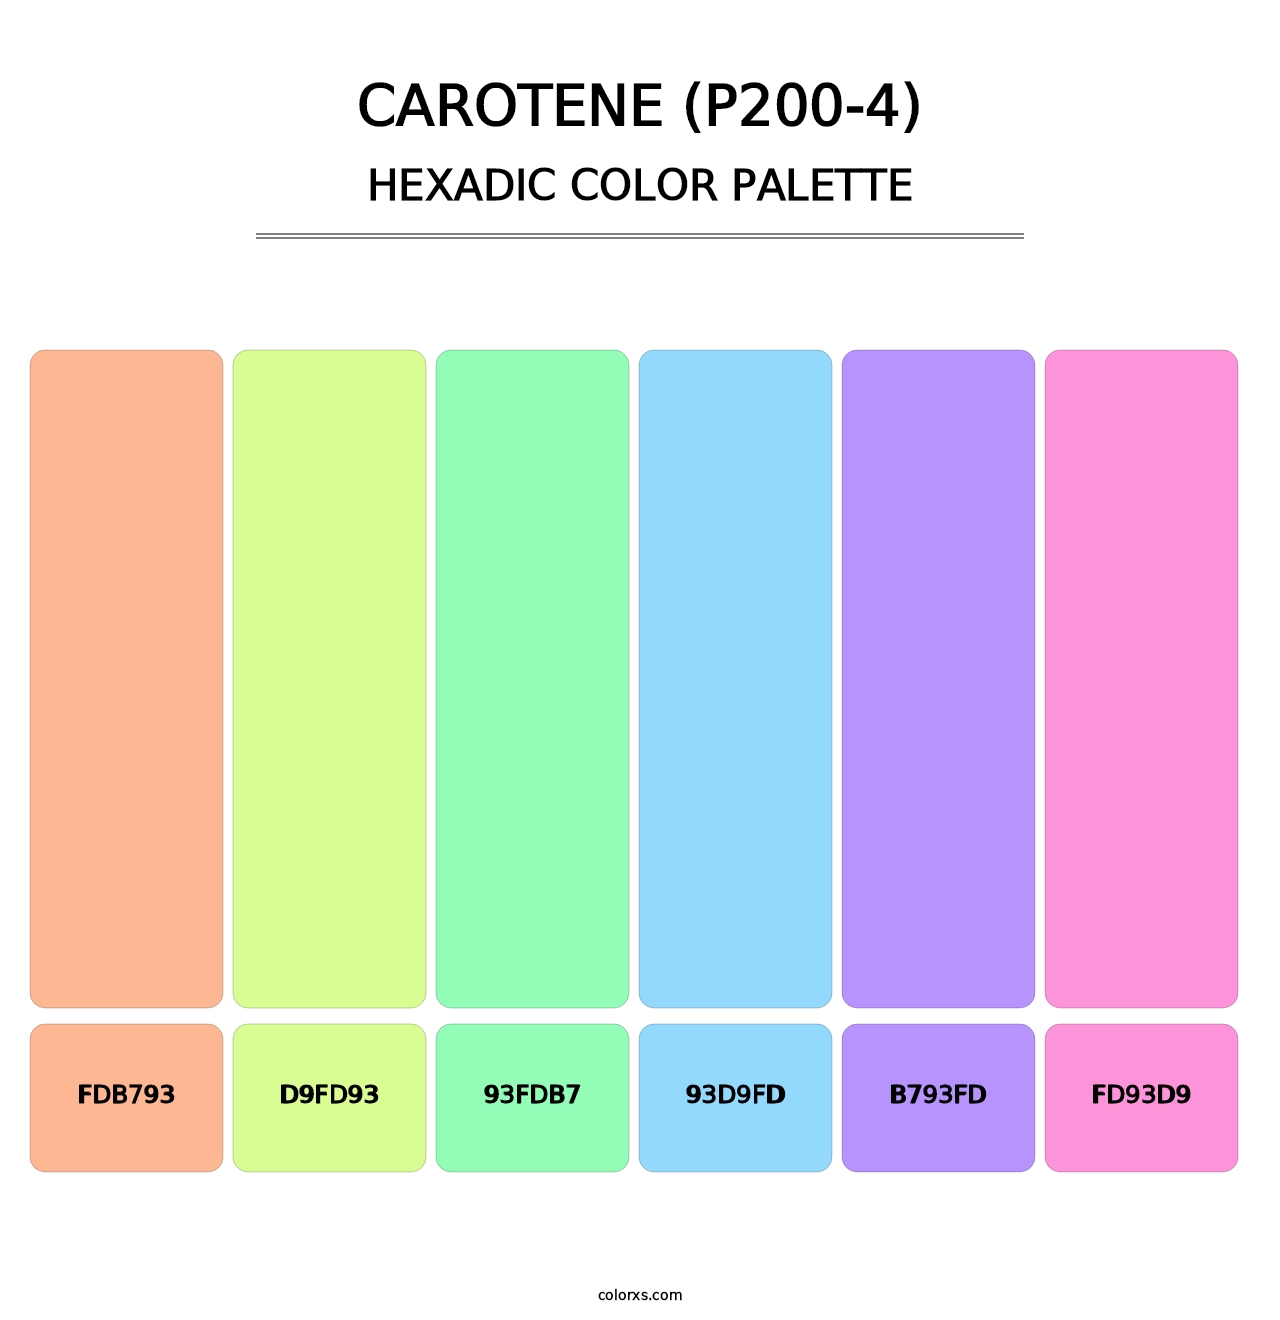 Carotene (P200-4) - Hexadic Color Palette